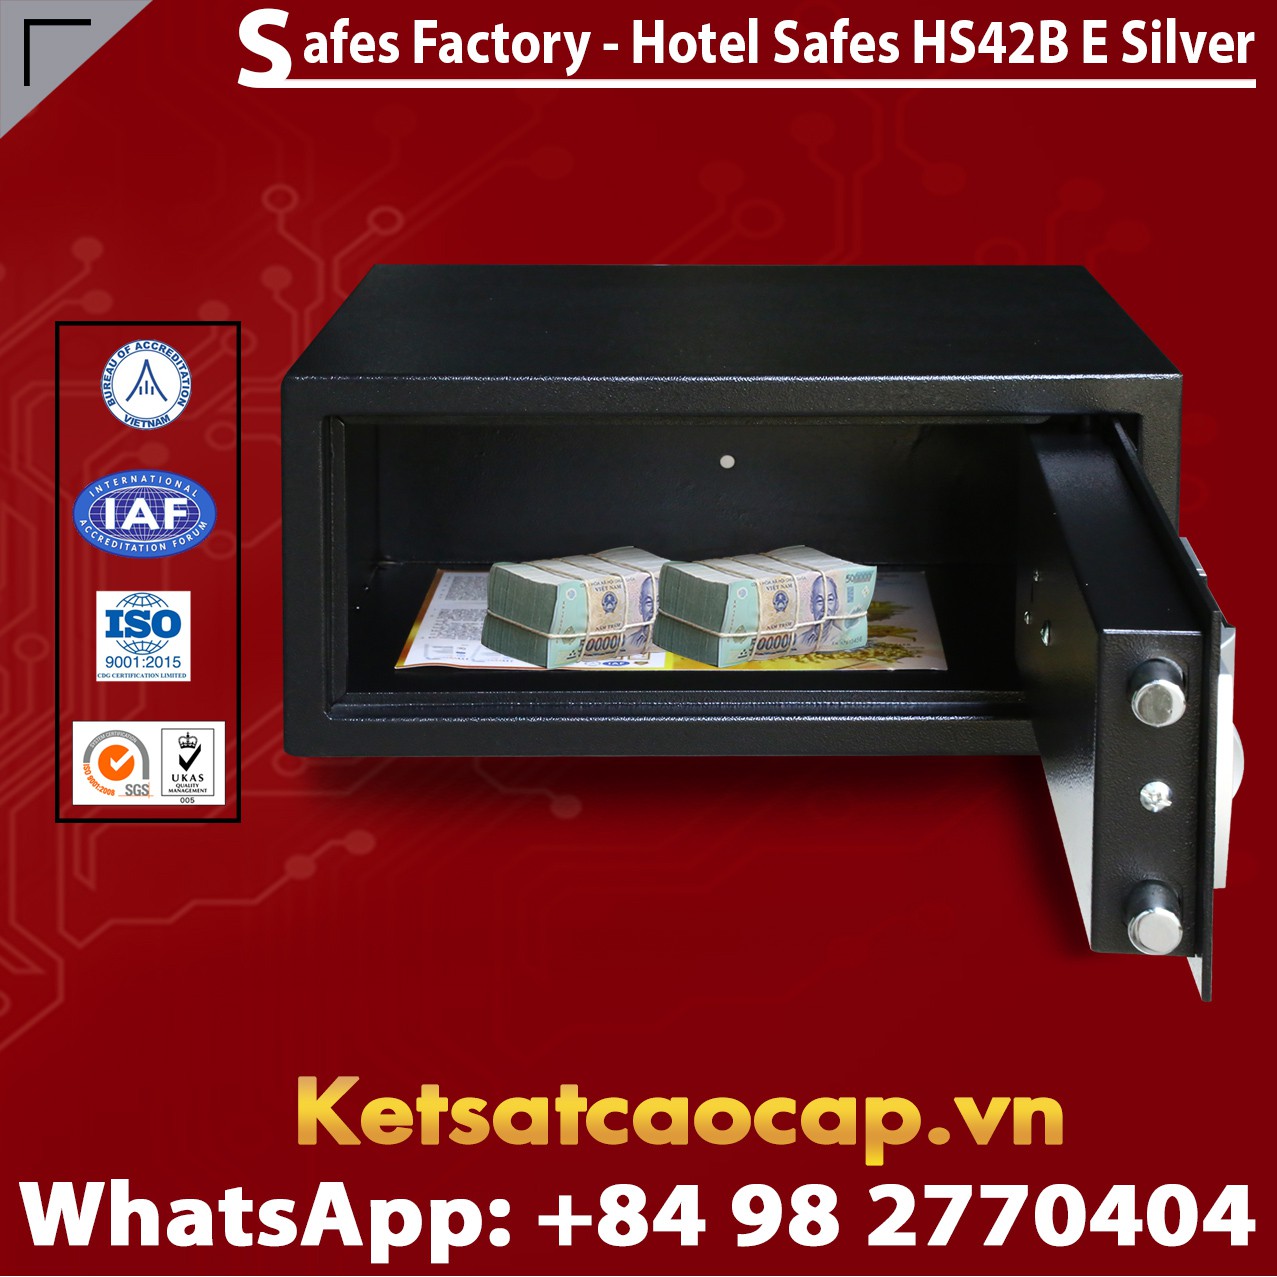 Safes in Hotel WELKO HS42 Black - E Silver